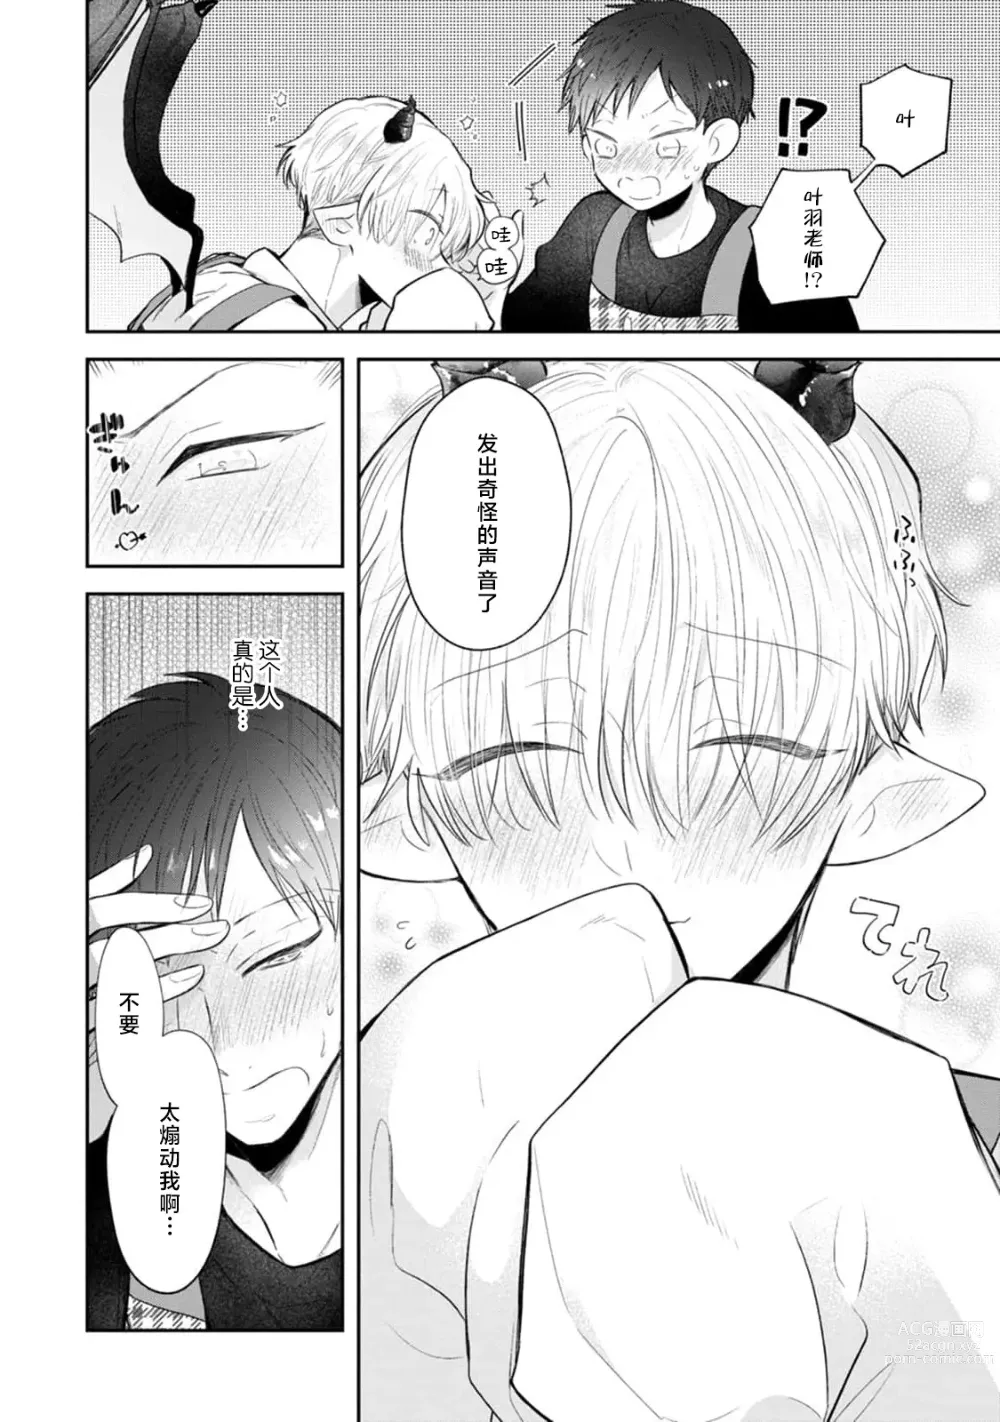 Page 4 of manga 叶羽老师全部是第一次 1-6 end